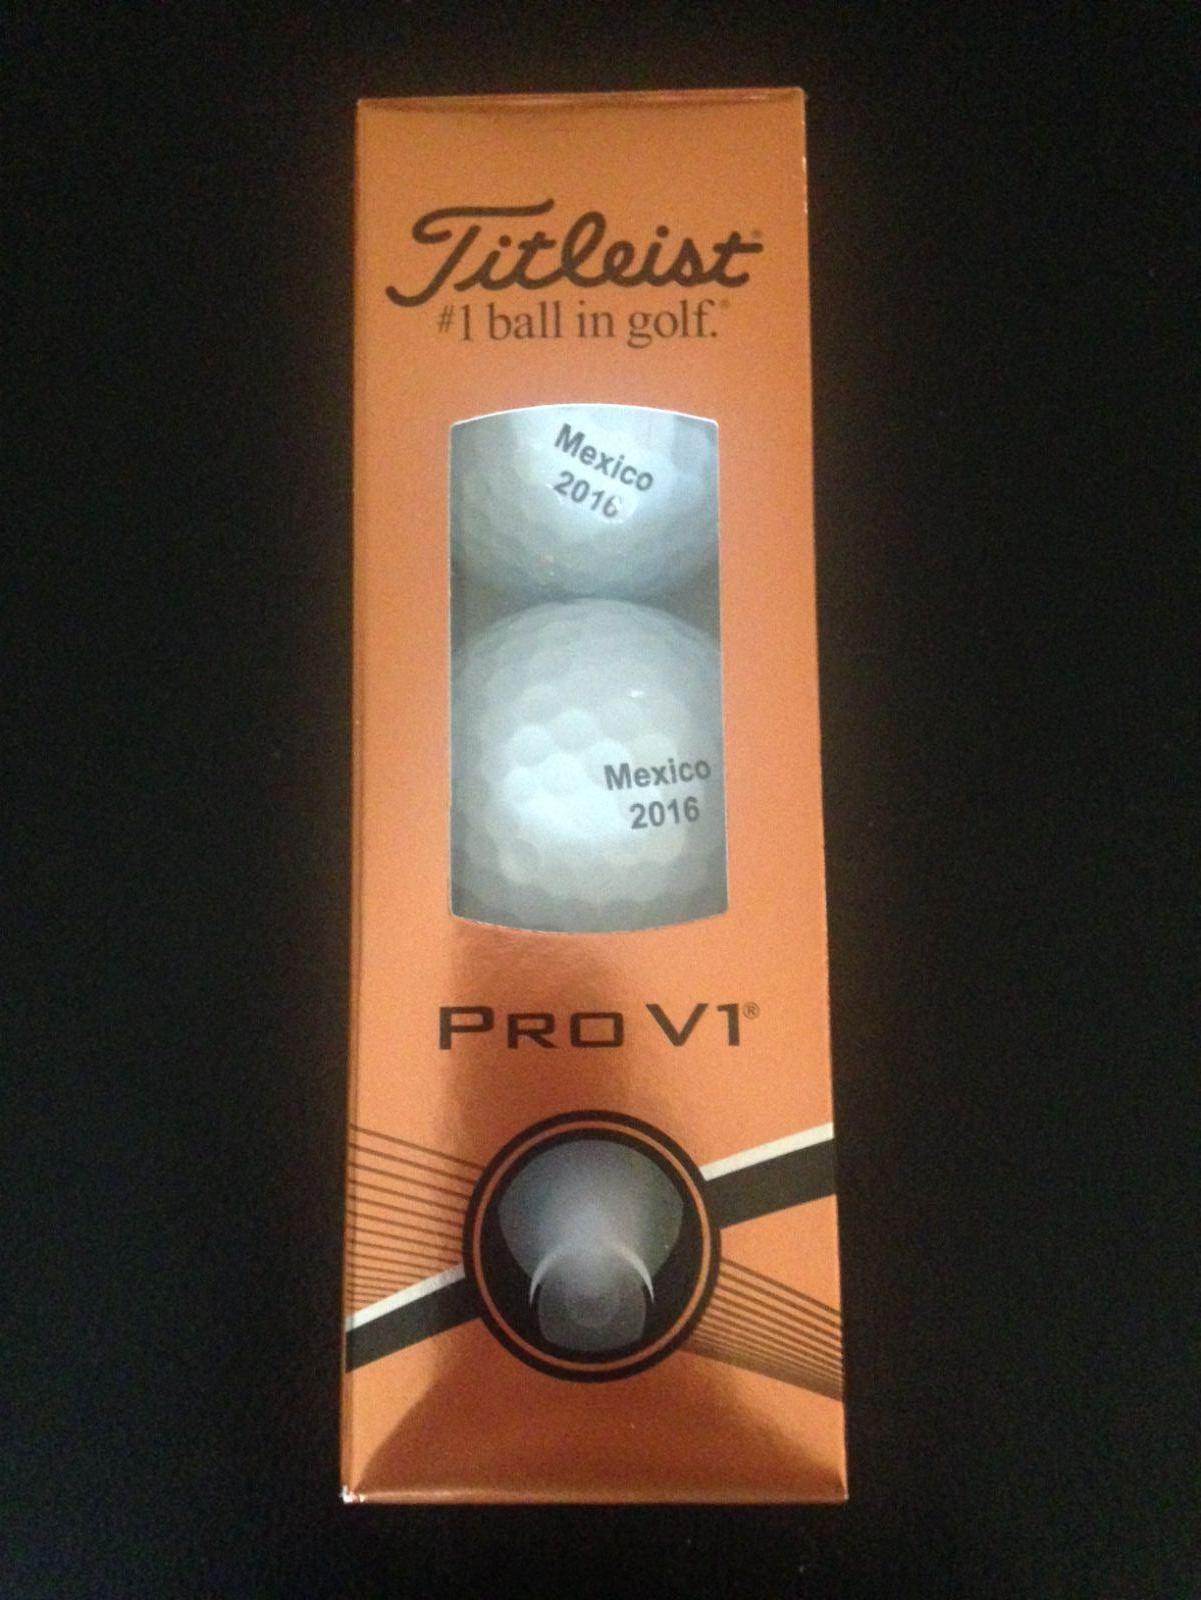 custom golf balls